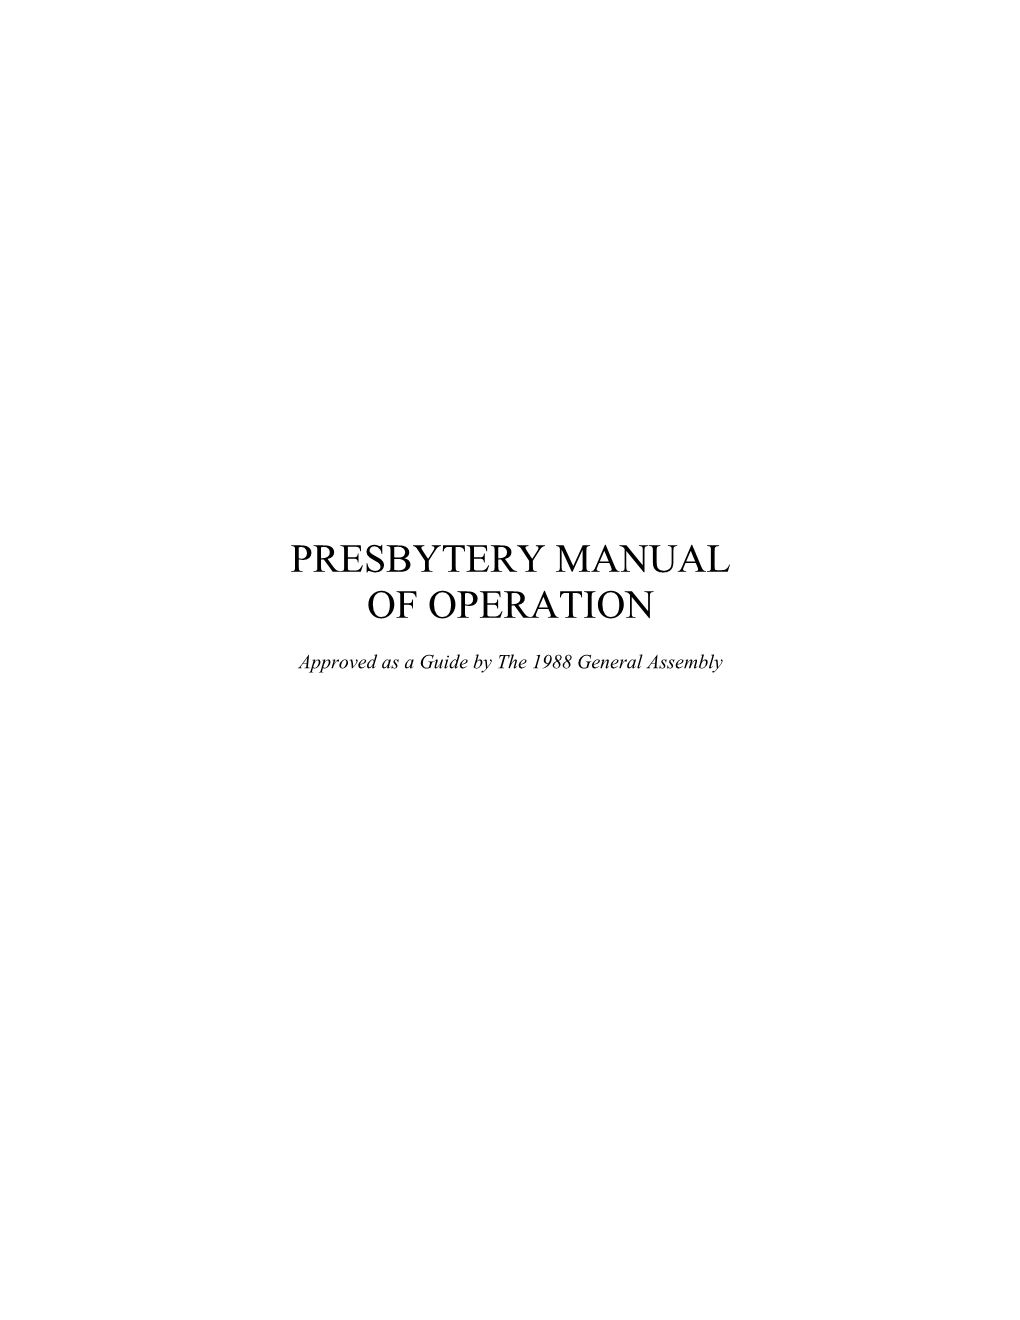 Presbytery Manual of Operation